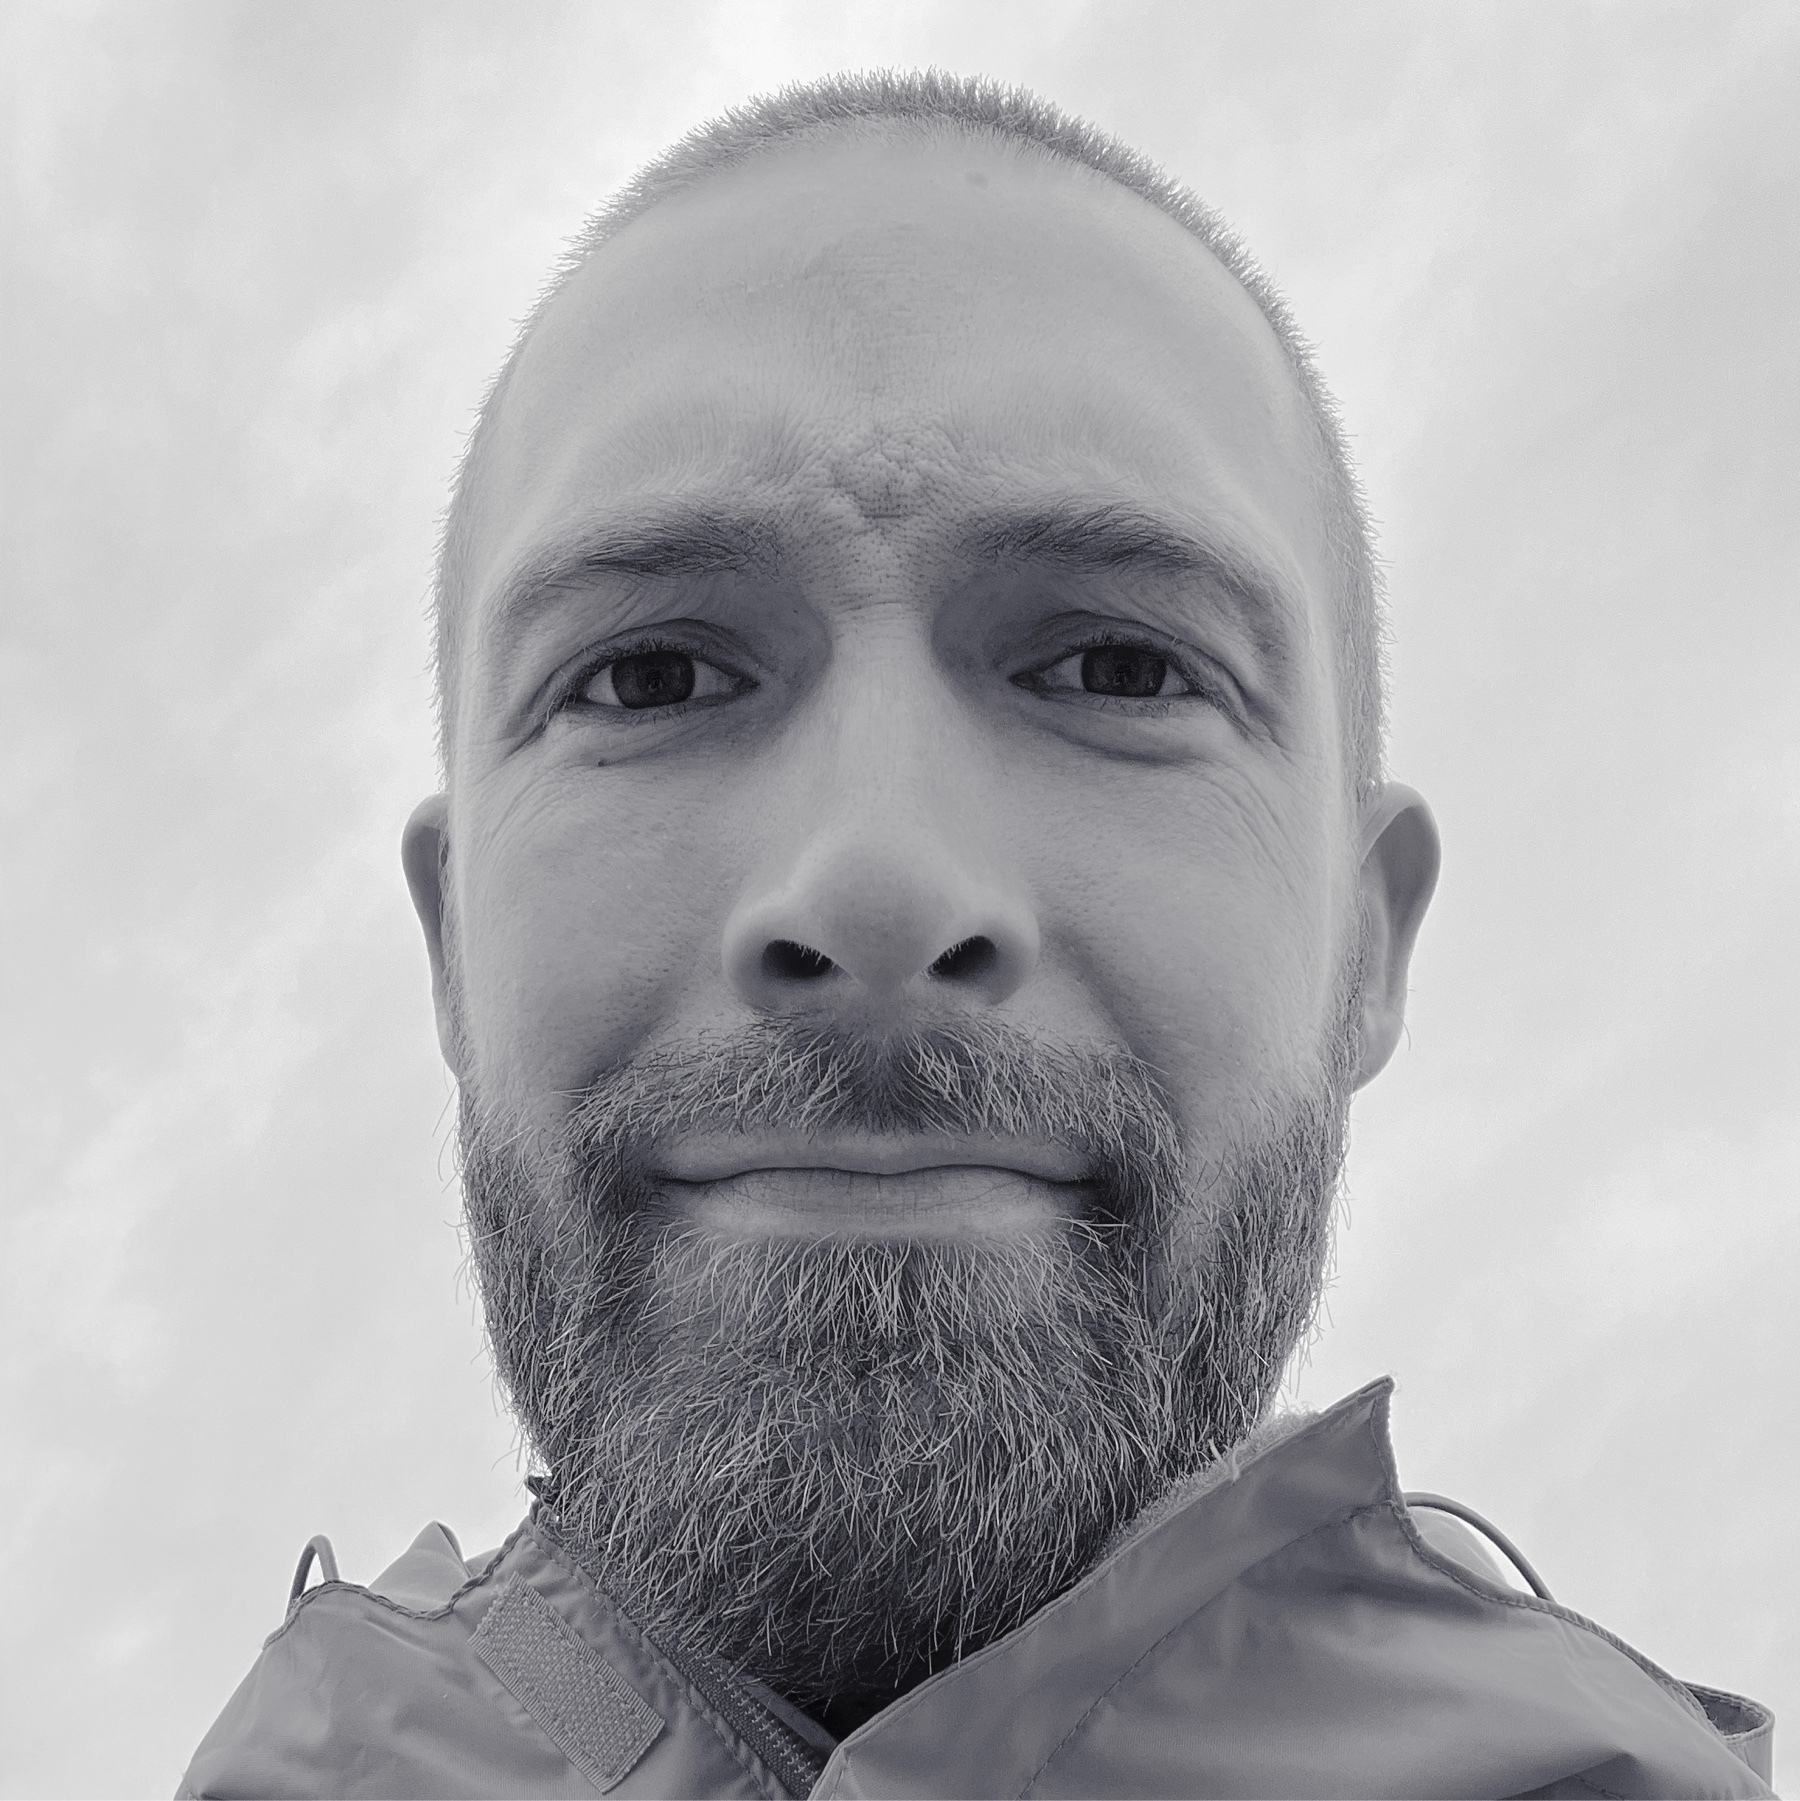 Gannon Nordberg selfie in black and white